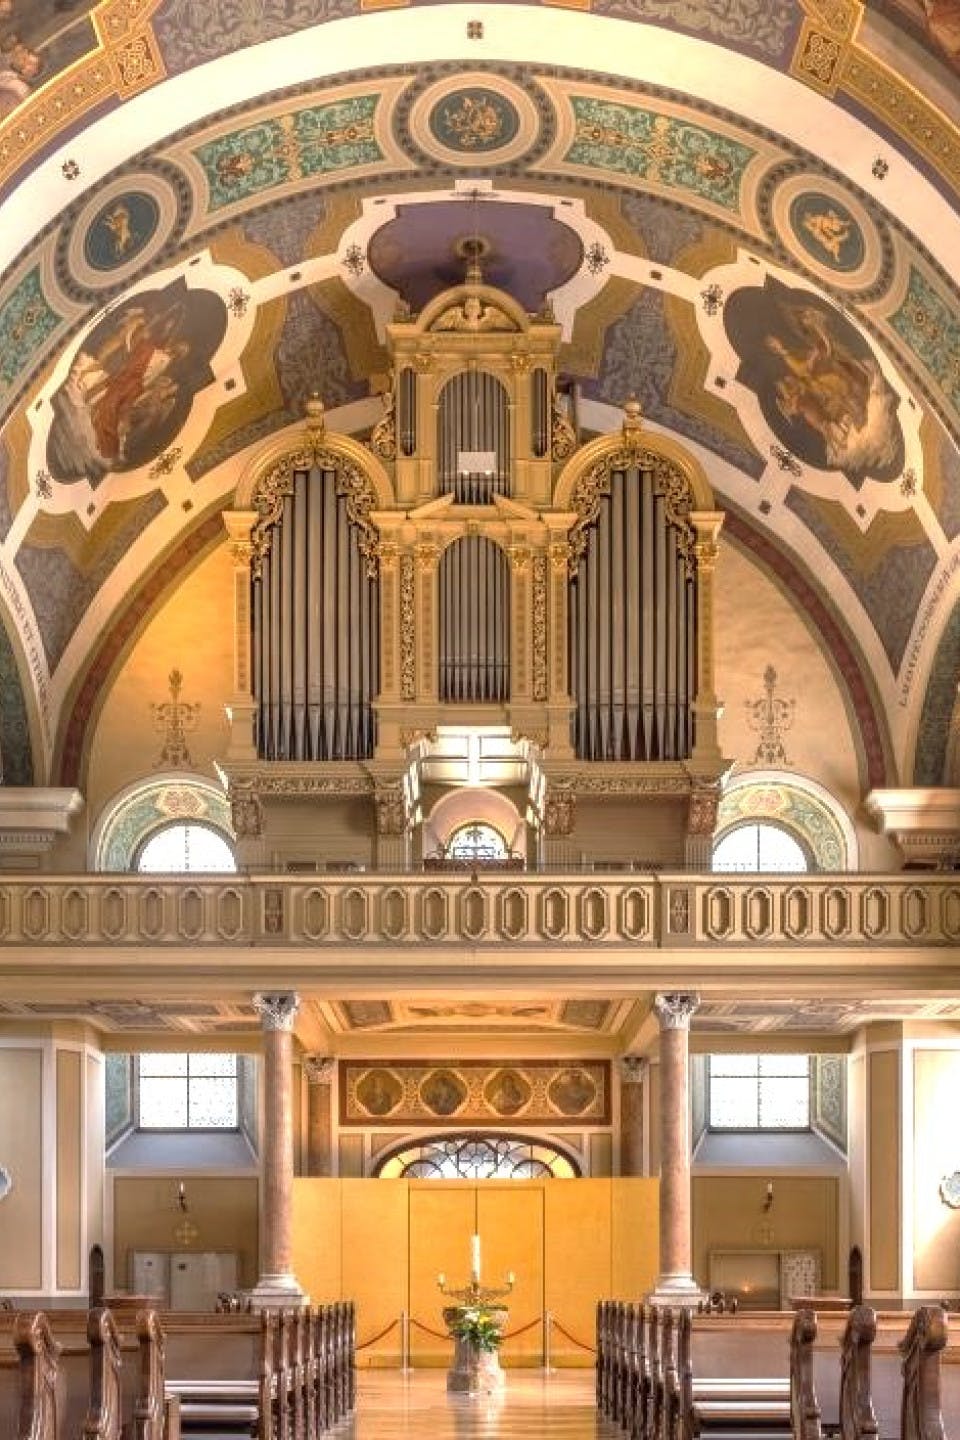 Bad Ischl Imperial Jubilee Organ (AT)